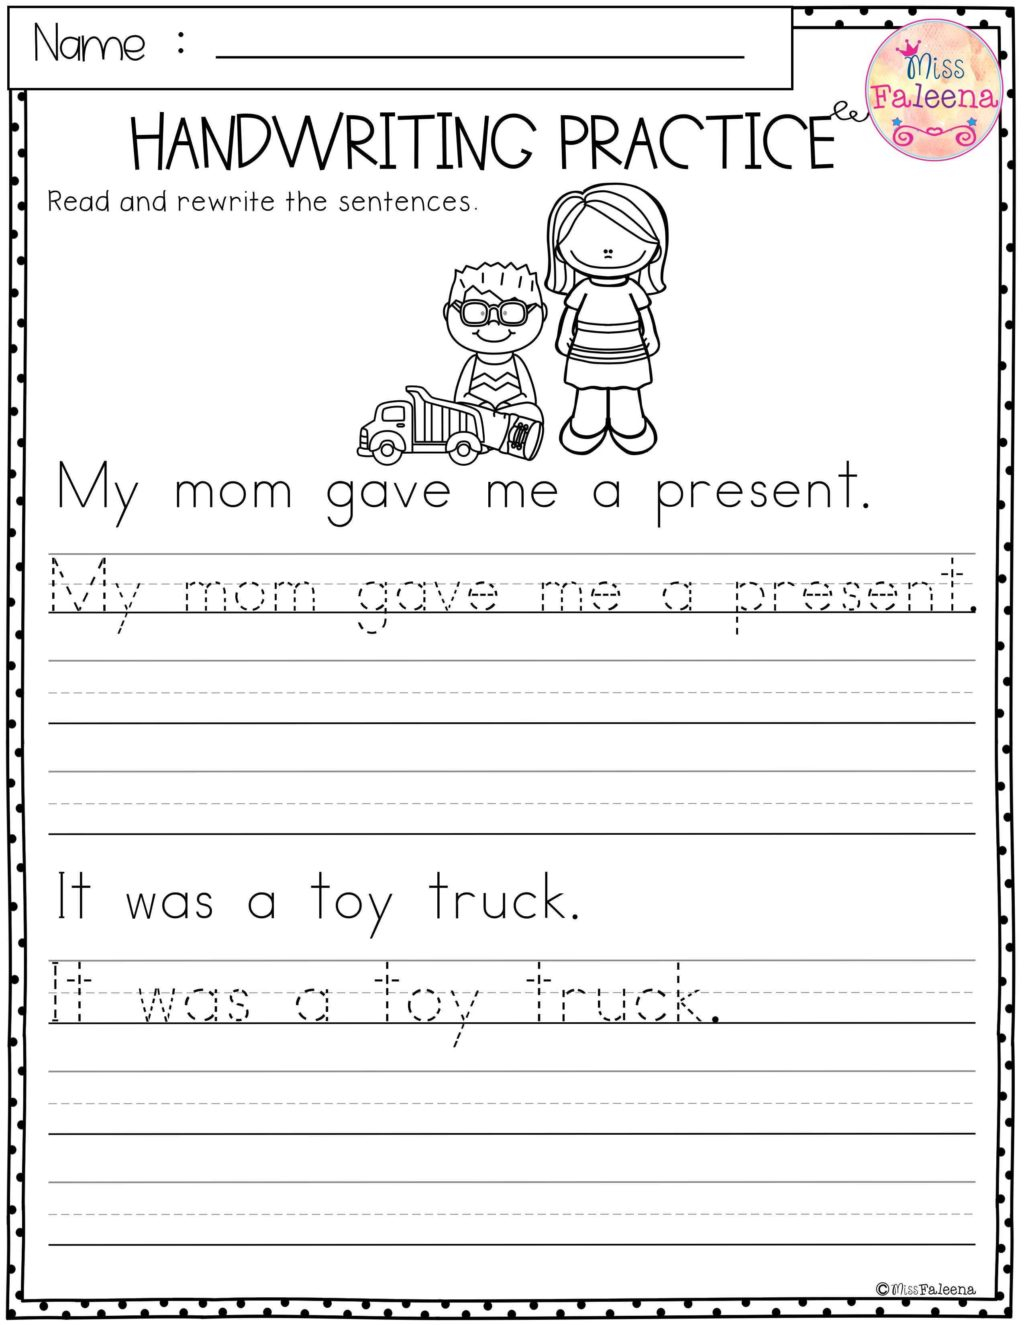 Worksheet ~ Christmas Handwriting Practice Pages Free